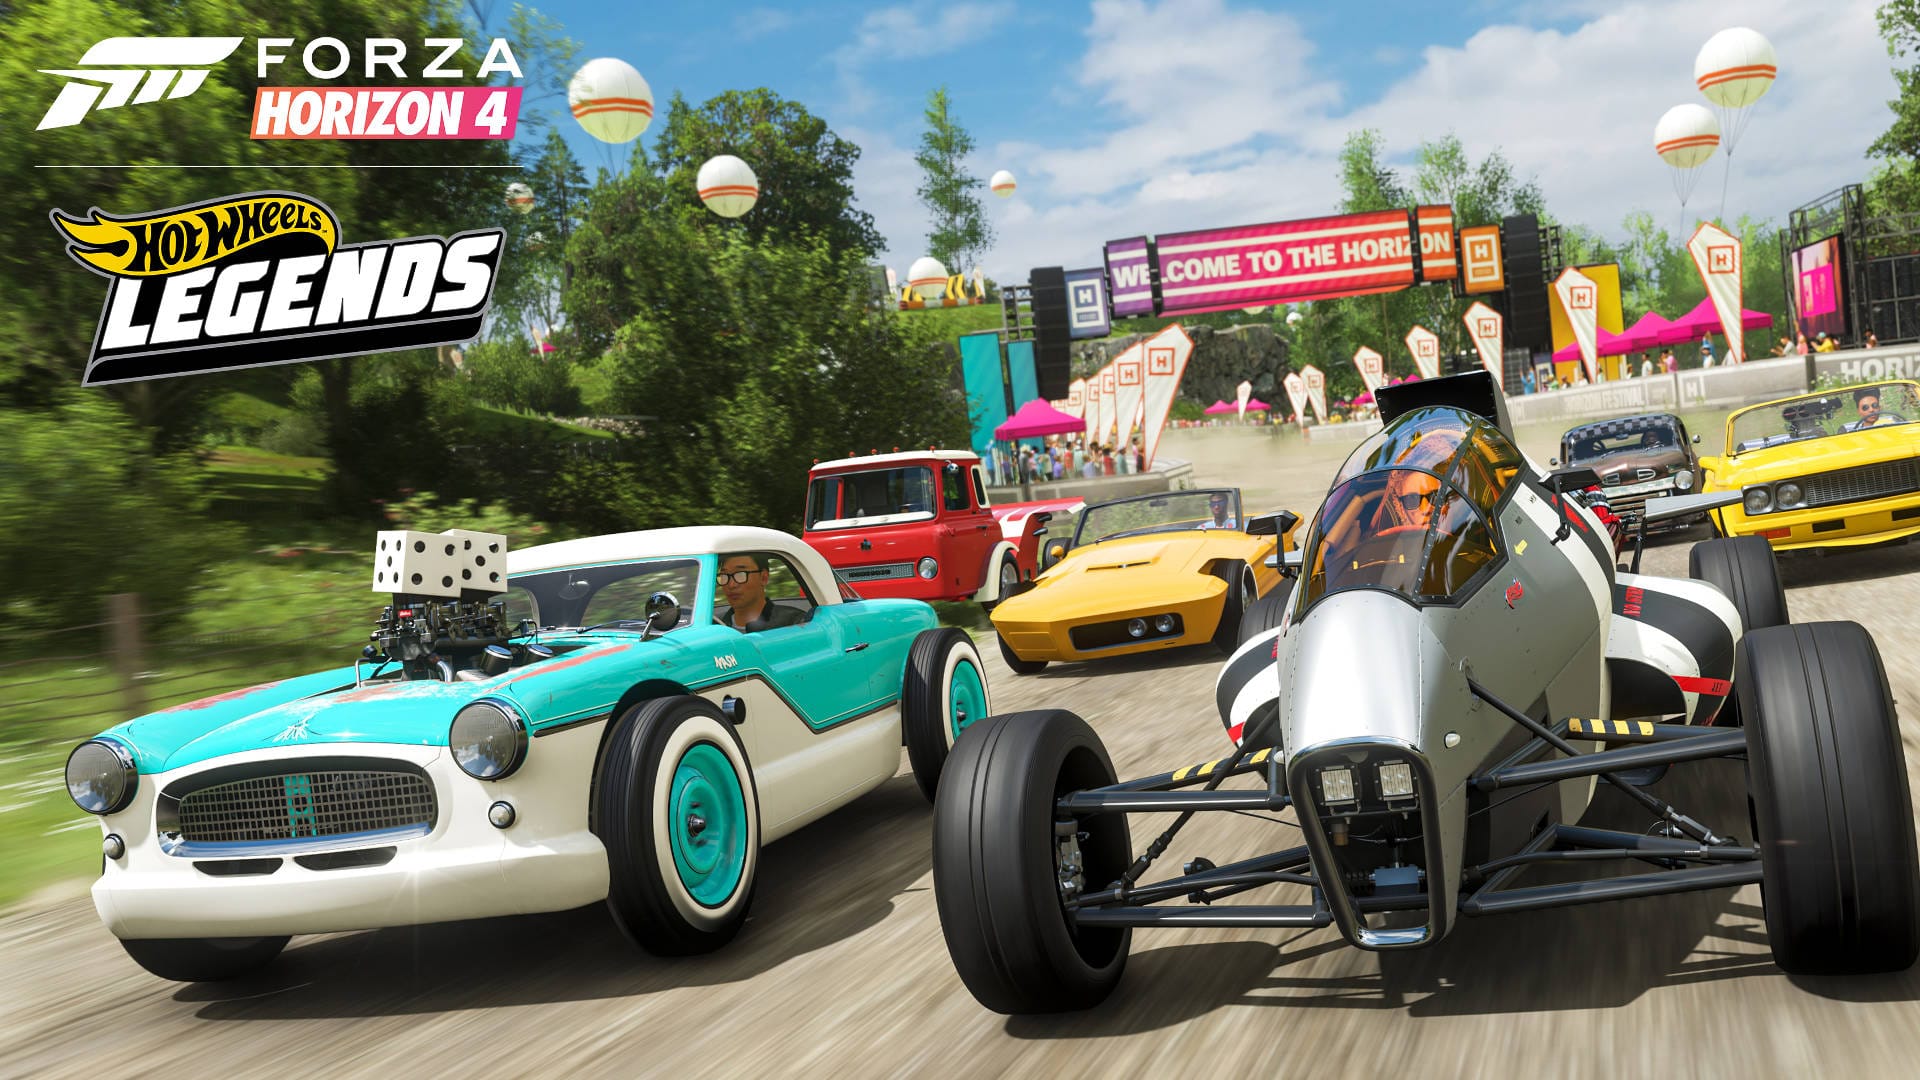 Forza Horizon 4 Hot Wheels Legend Steam cross-progression cover